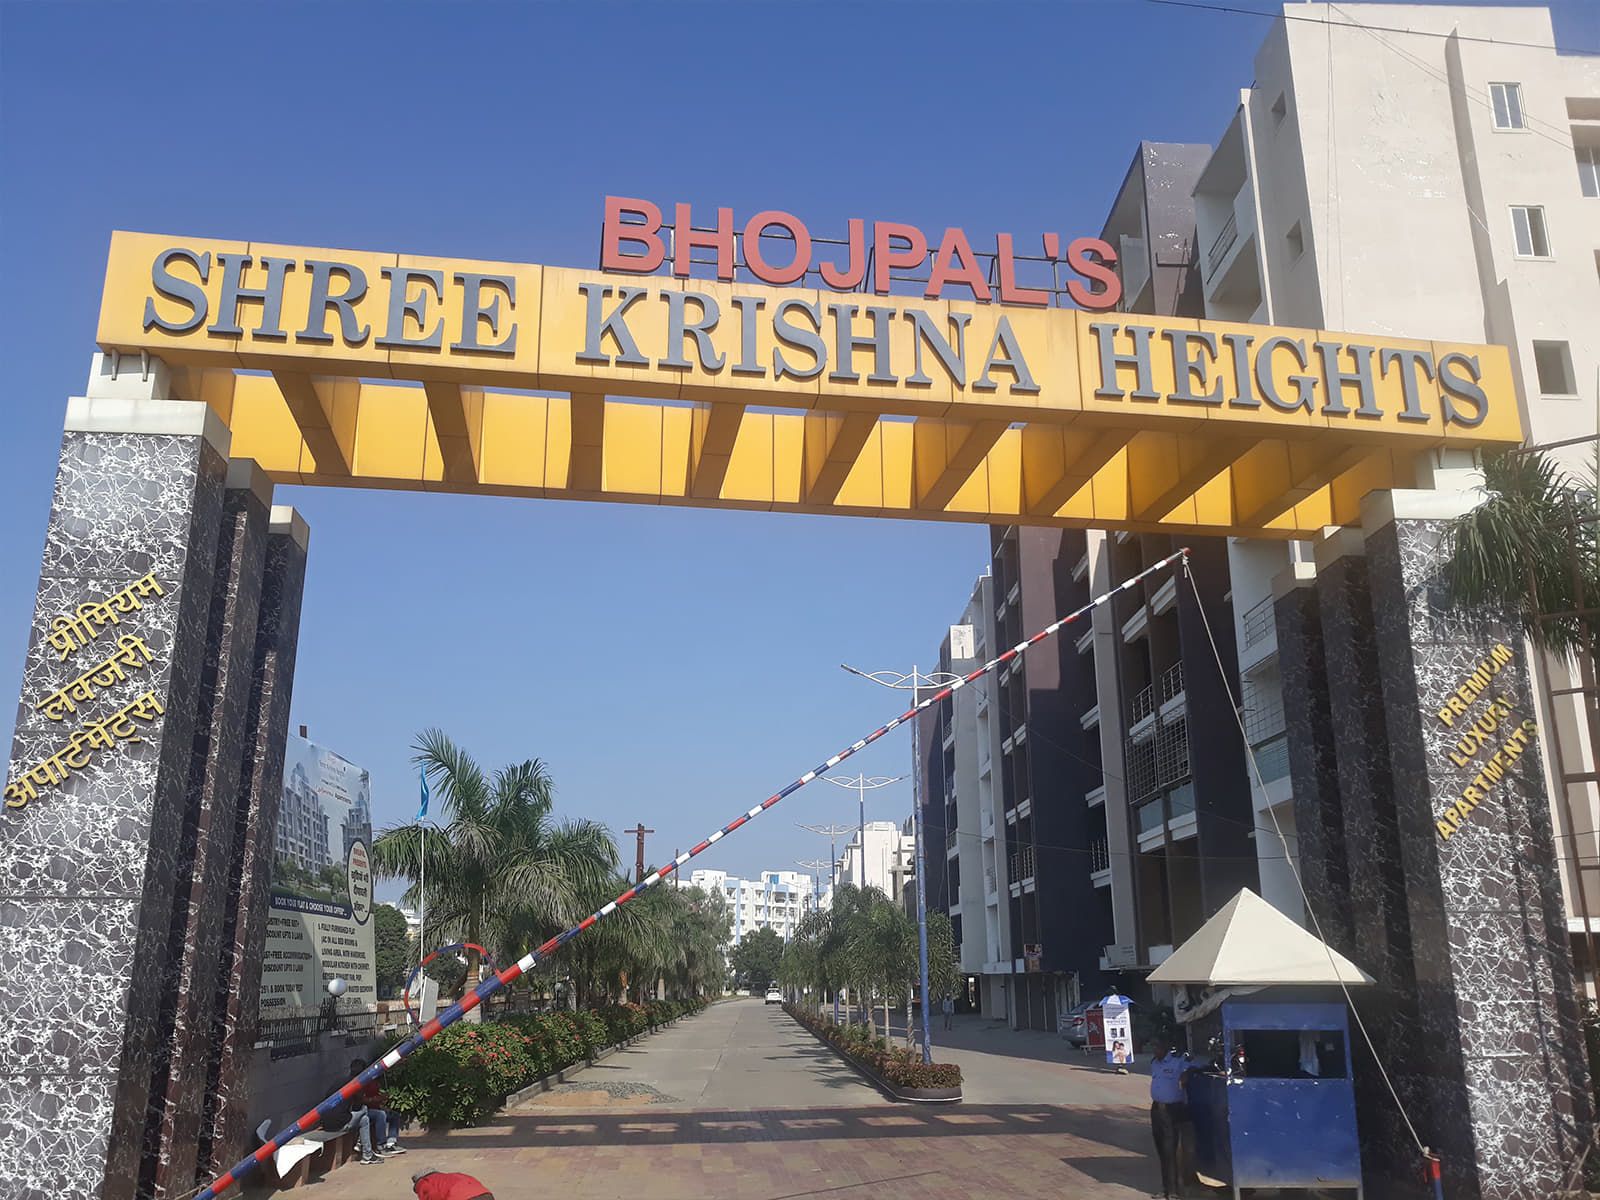 Bhojpal Shree Krishna Heights location